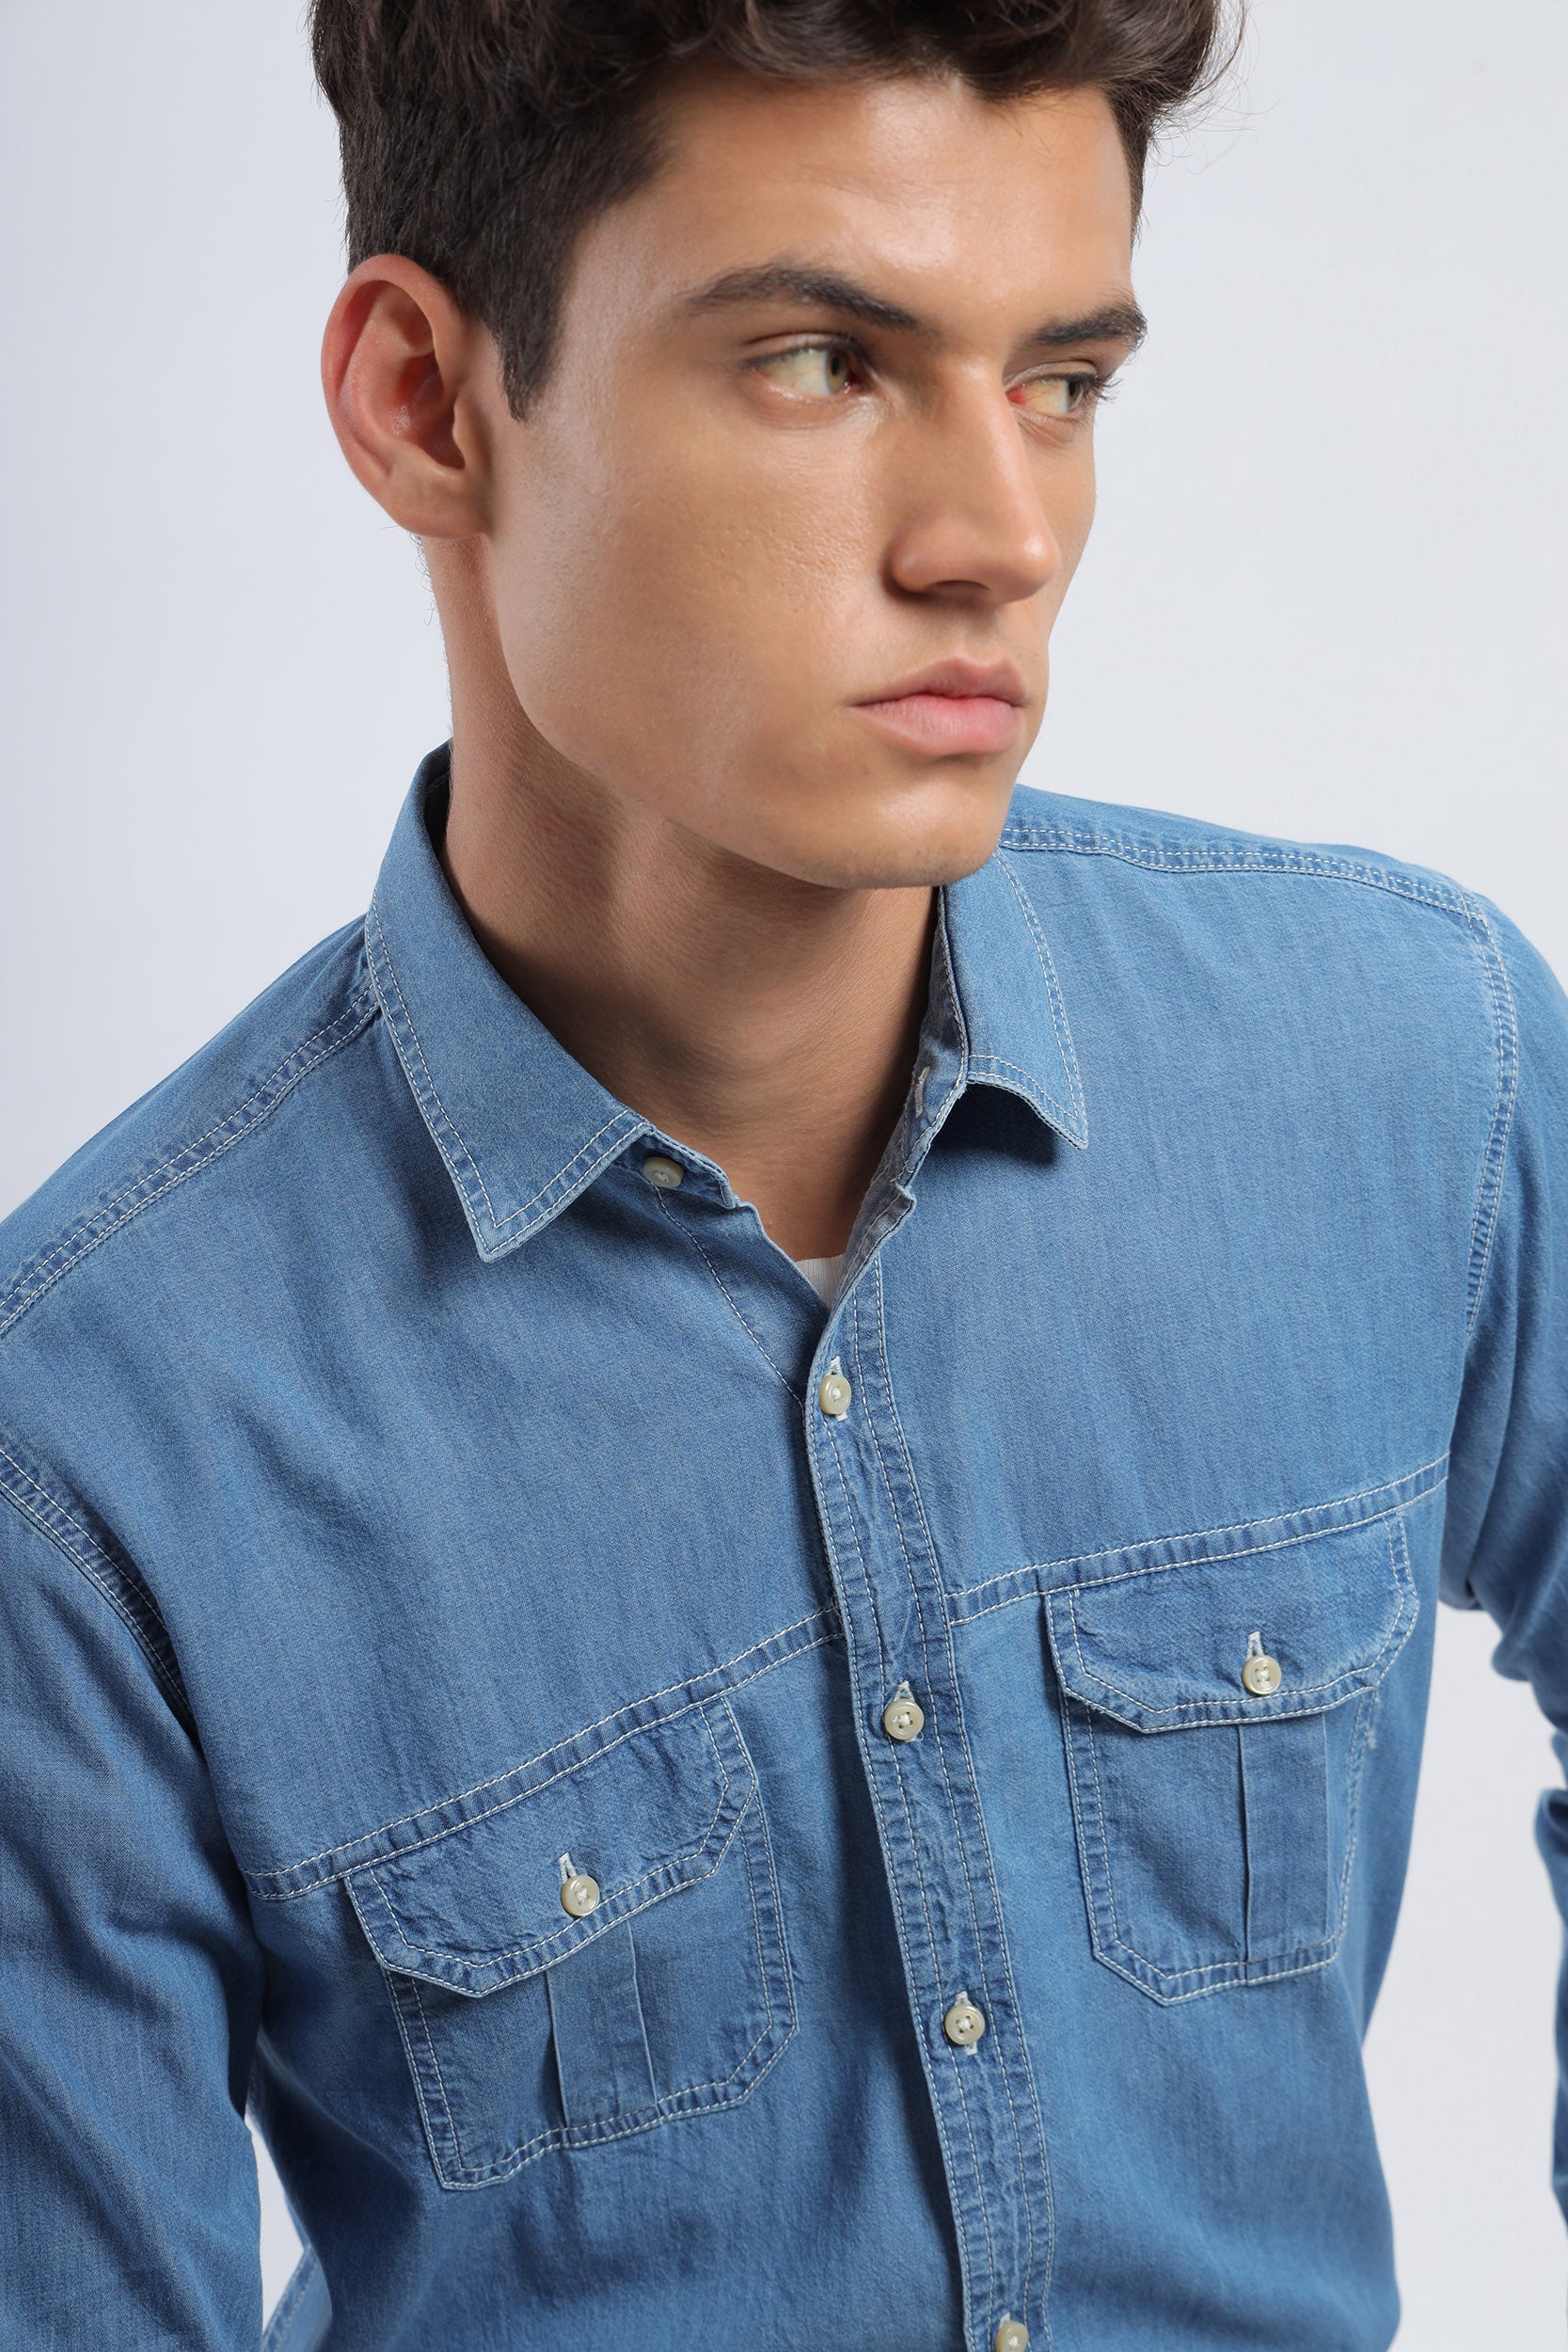 Très Bien - Acne Studios Denim Button-Up Shirt Indigo Blue